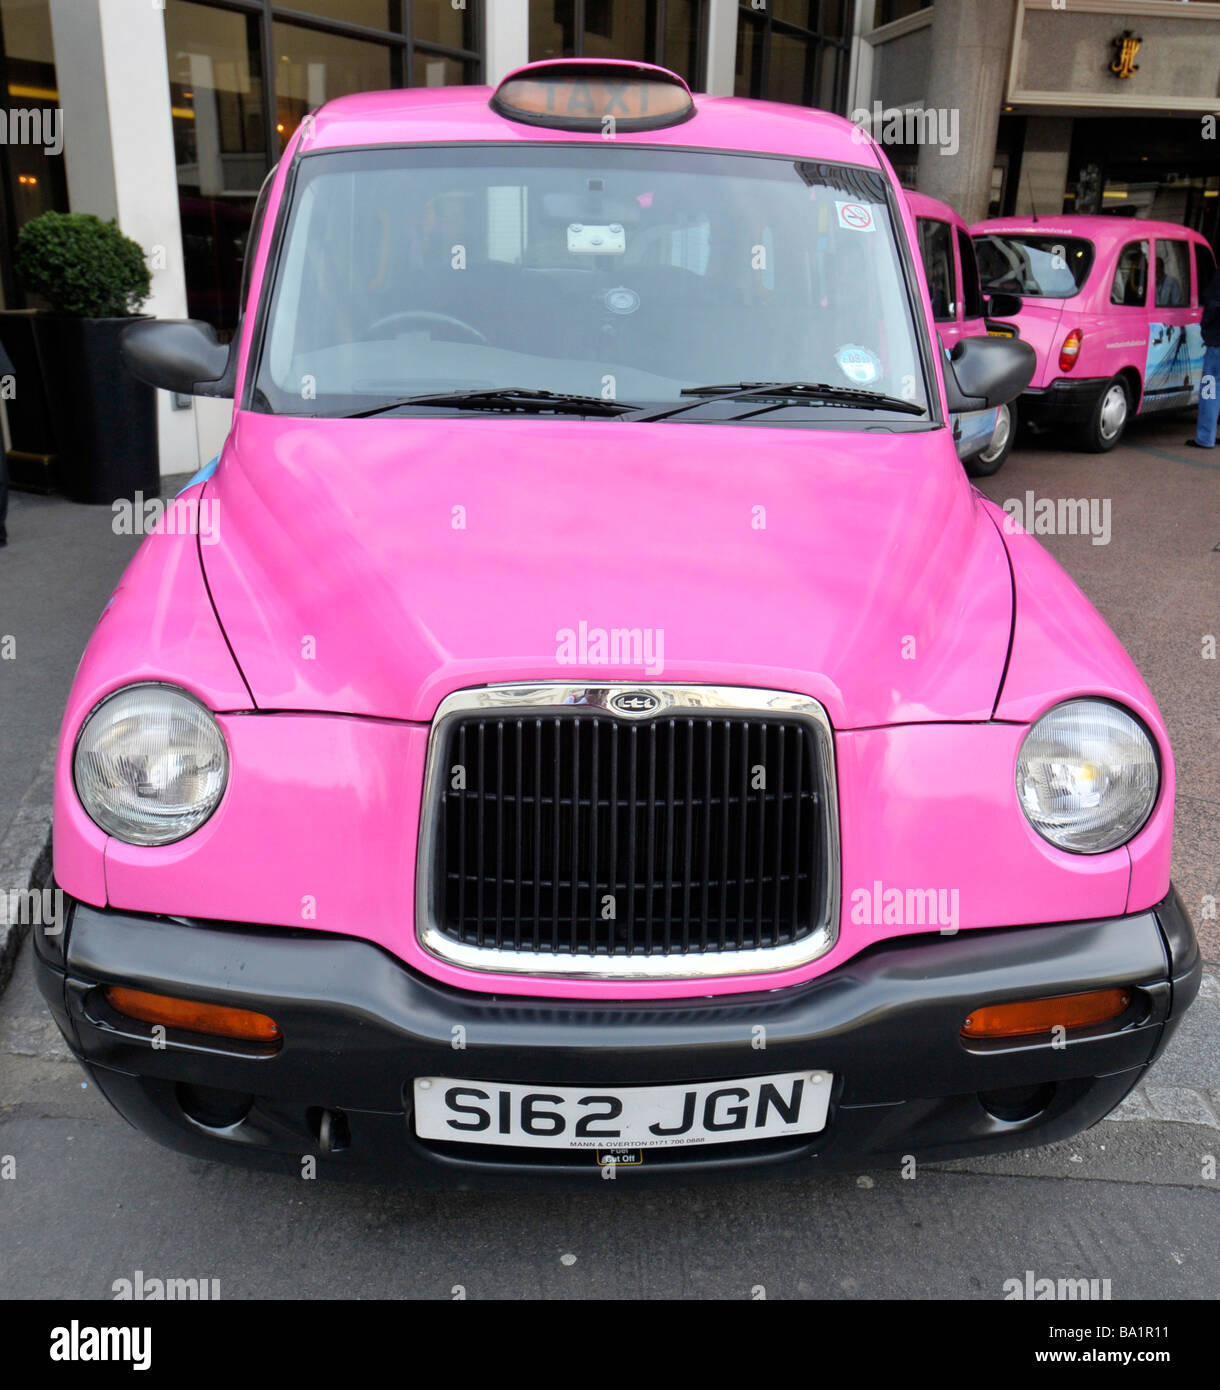 Taxi Londres rose Banque D'Images